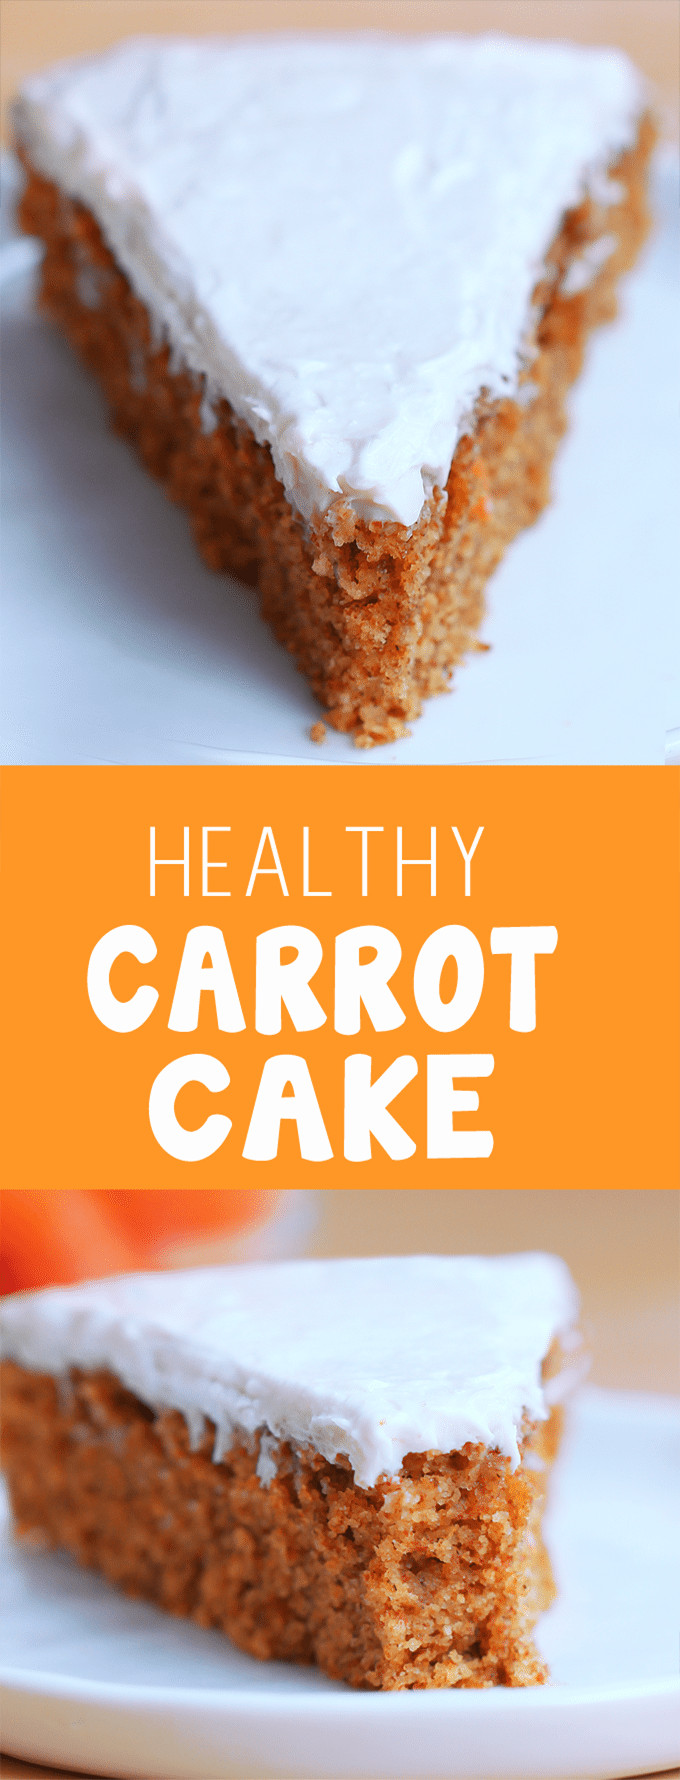 Healthy Moist Carrot Cake Recipe
 Healthy Carrot Cake